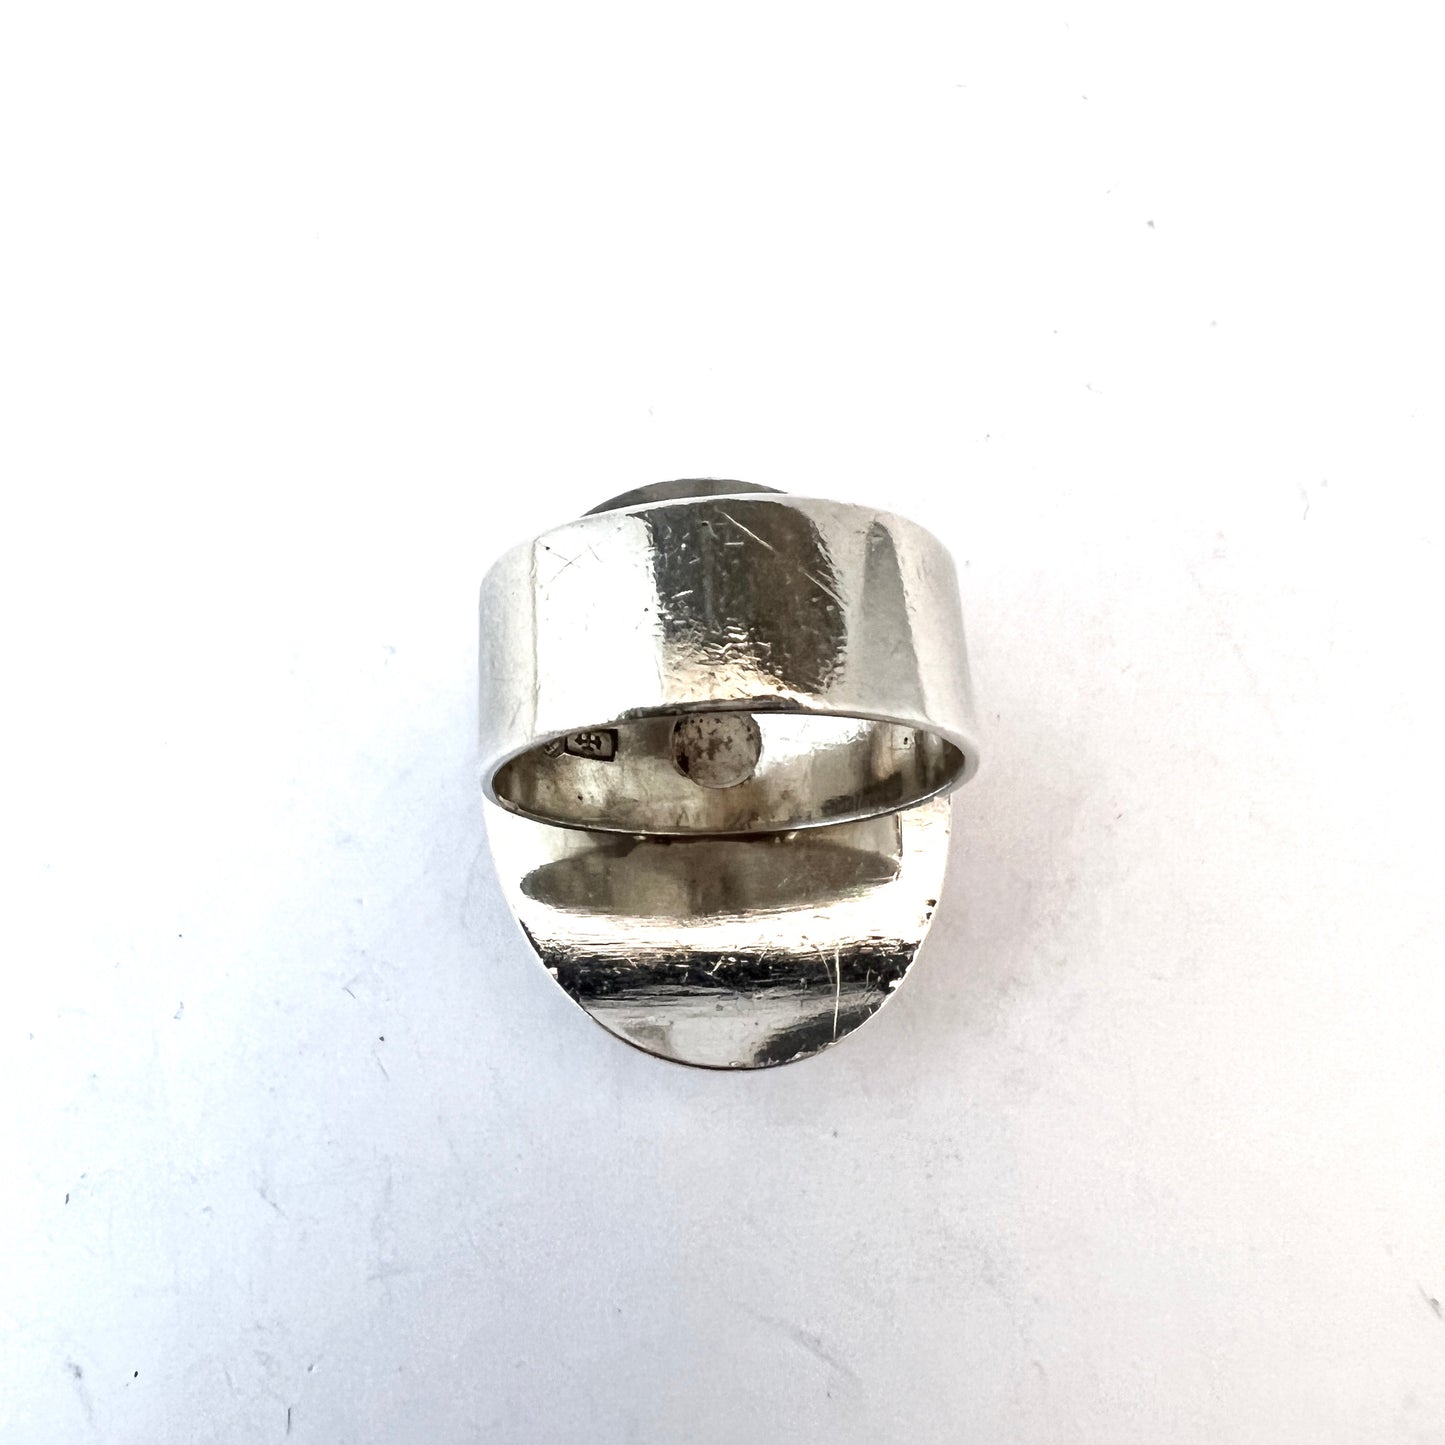 Turun Hopea, Finland 1964. Vintage Solid Silver Amethyst Ring.